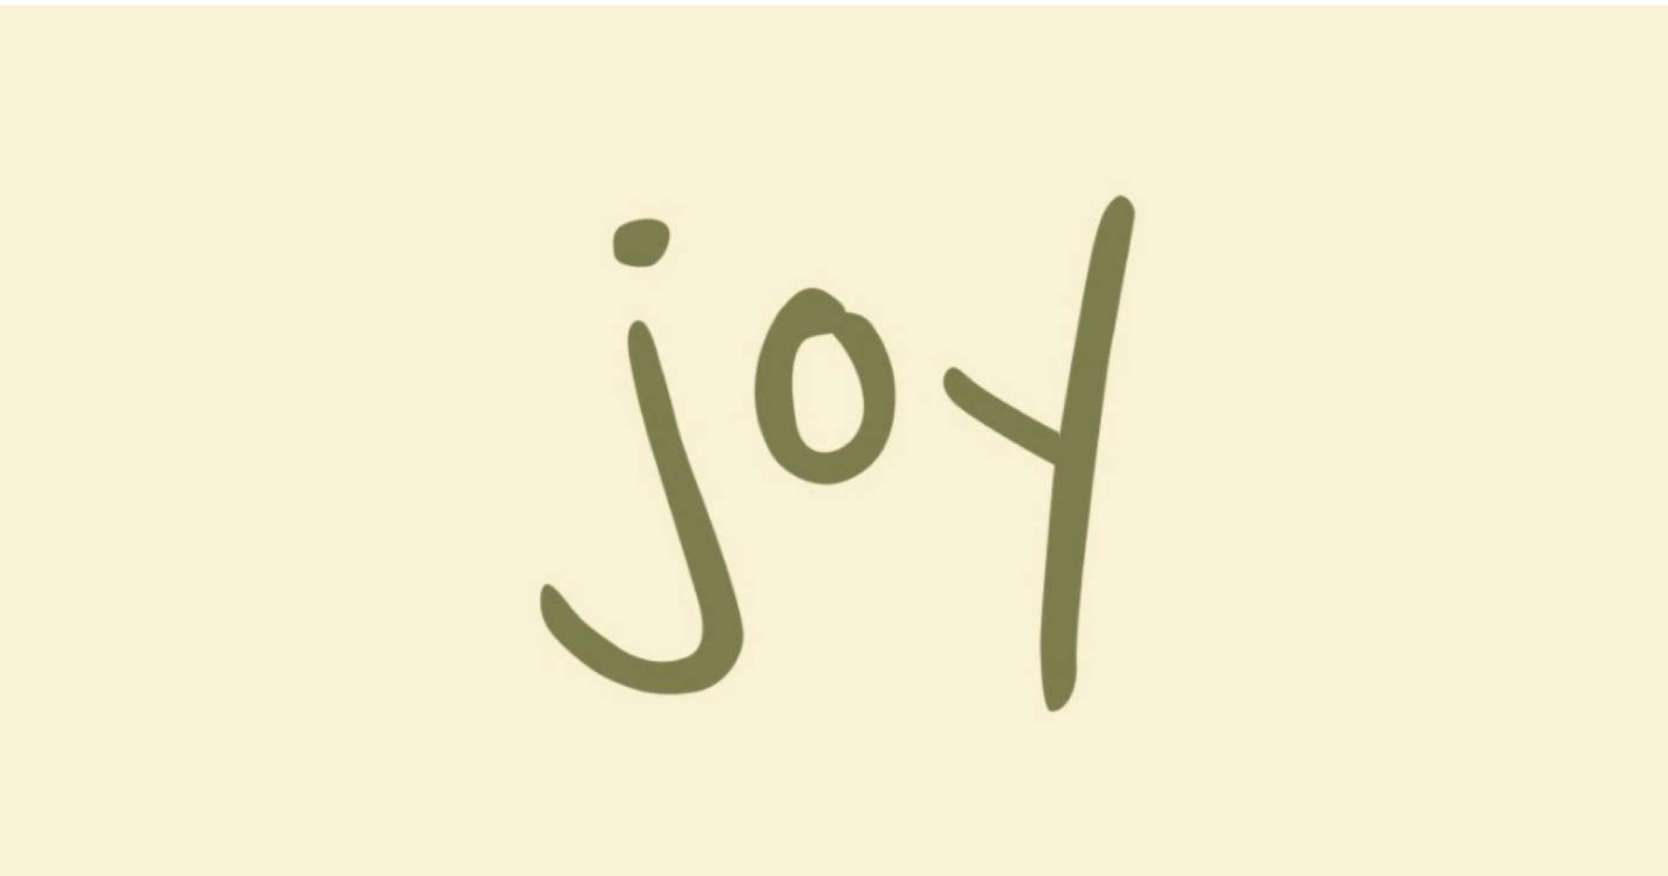 Joy Restaurant